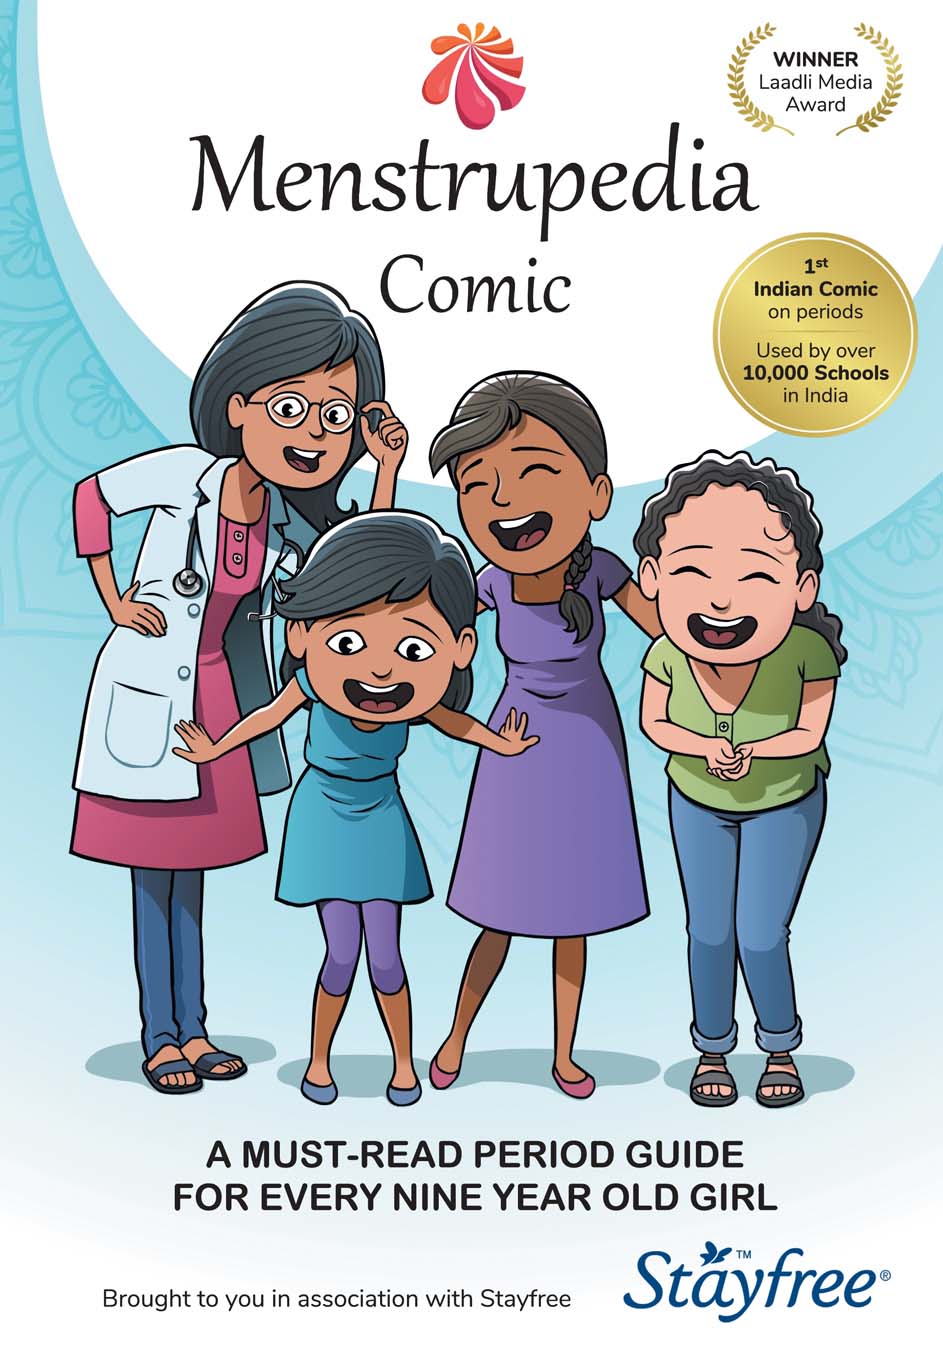 Menstrupedia Comic - A must read period guide